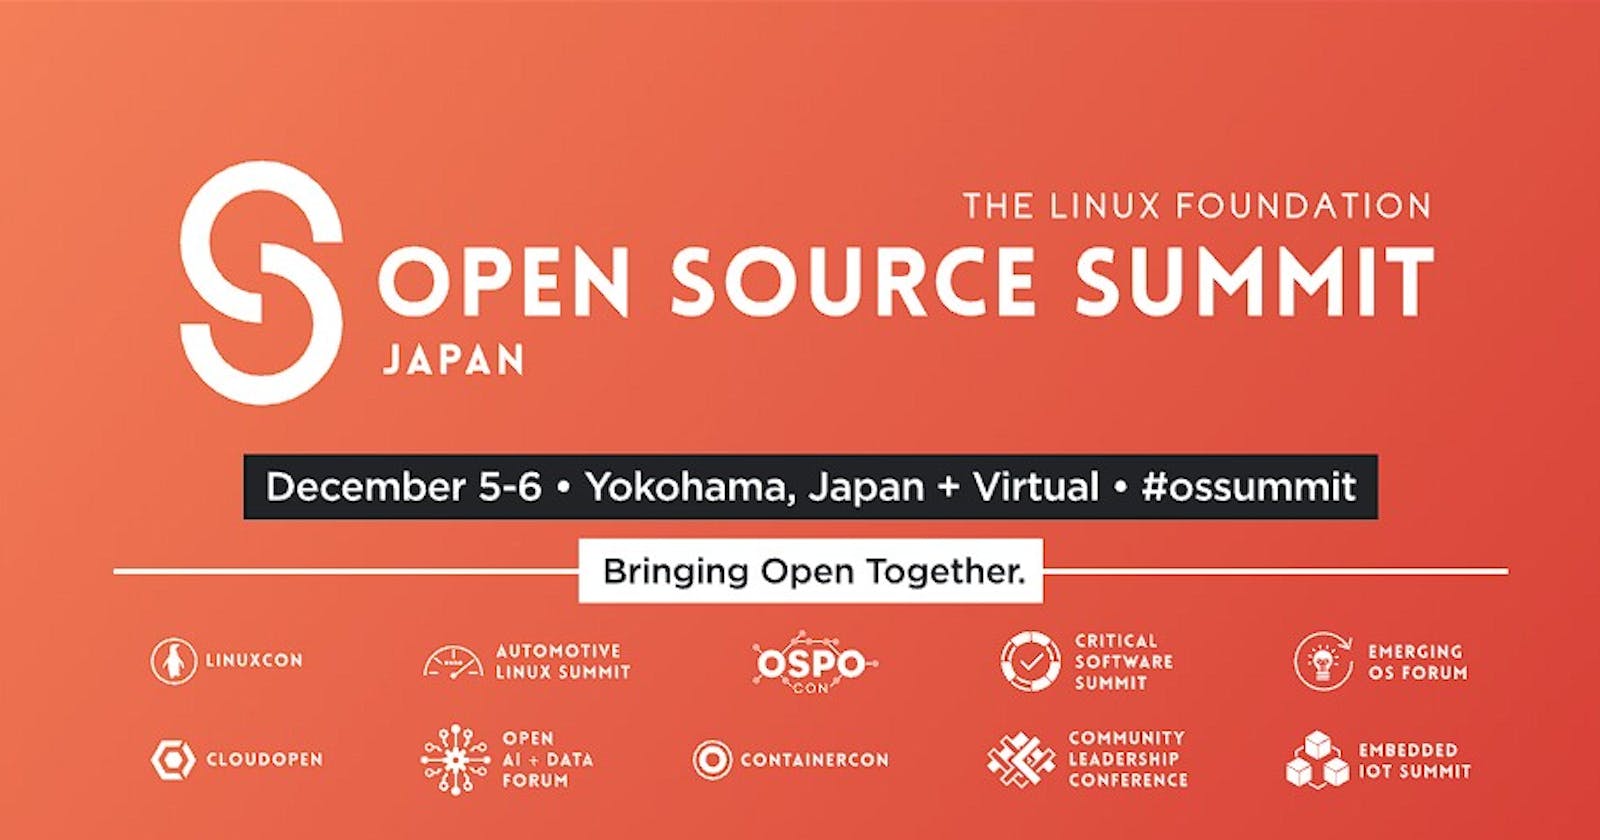 My Open Source Summit Japan(Yokohama) 2022 Experience.